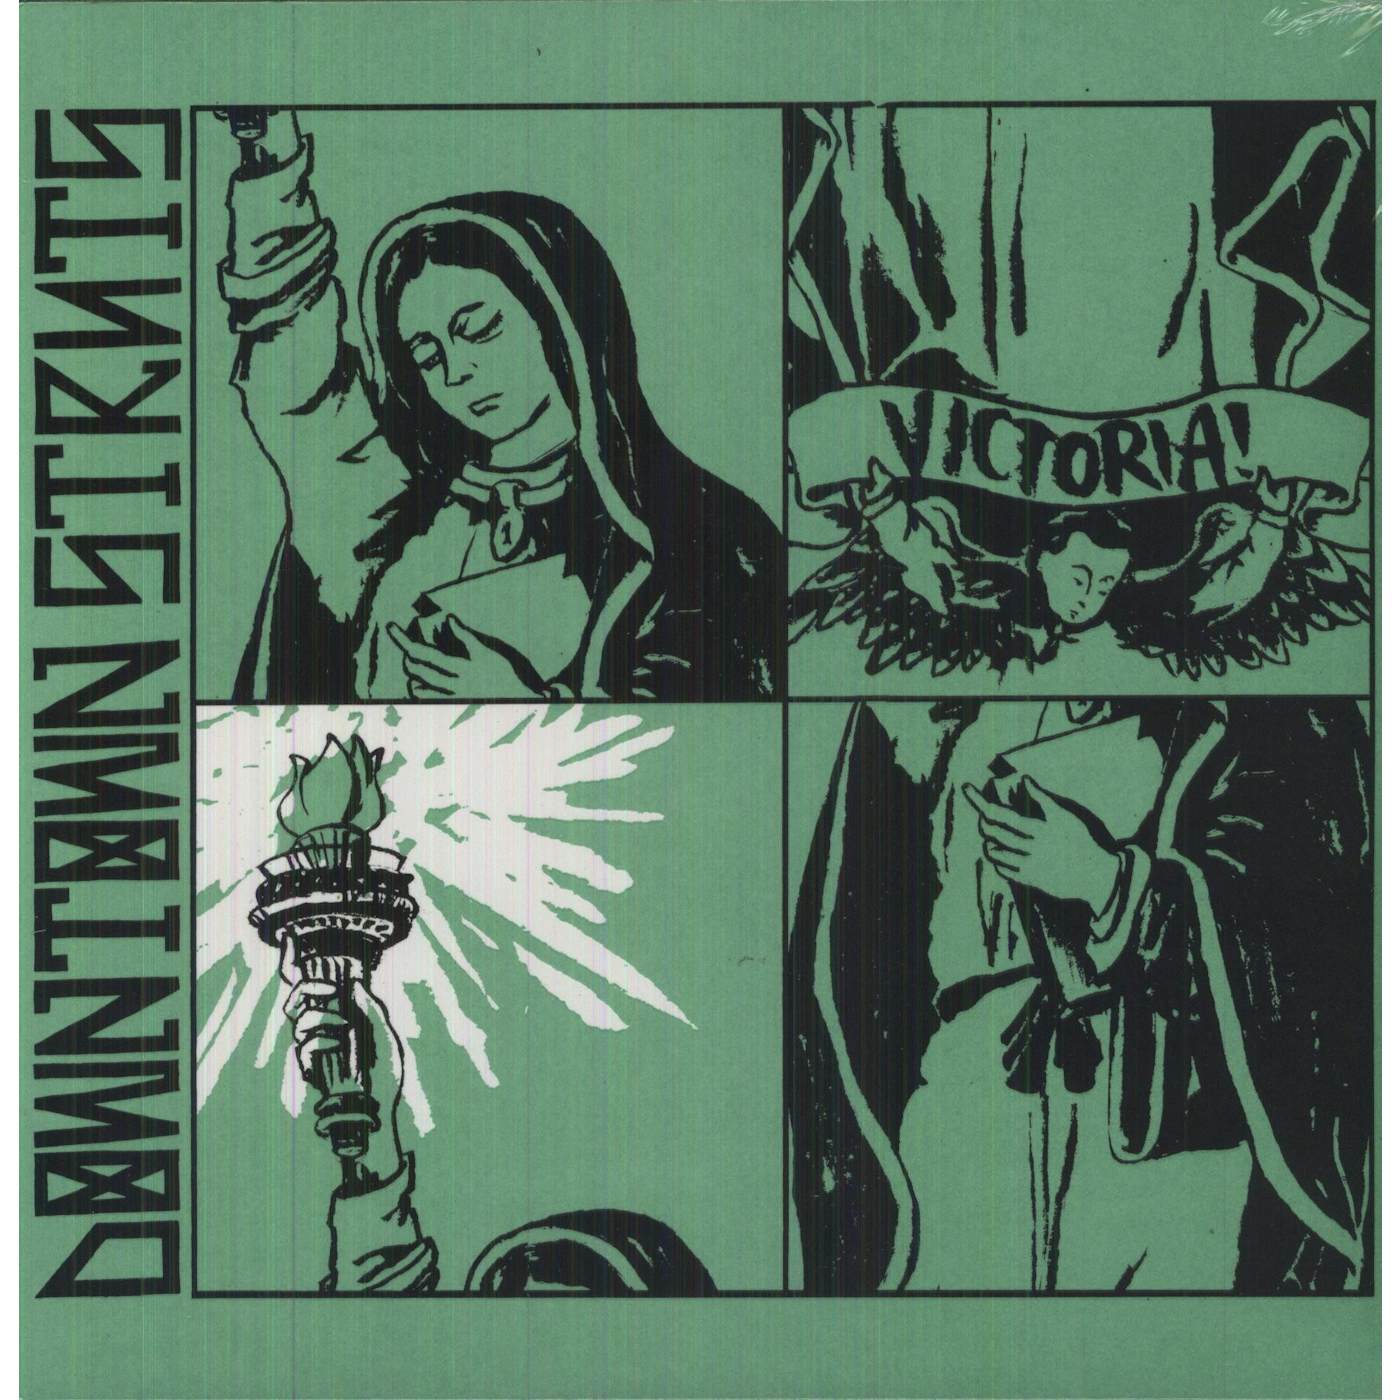 Downtown Struts VICTORIA Vinyl Record